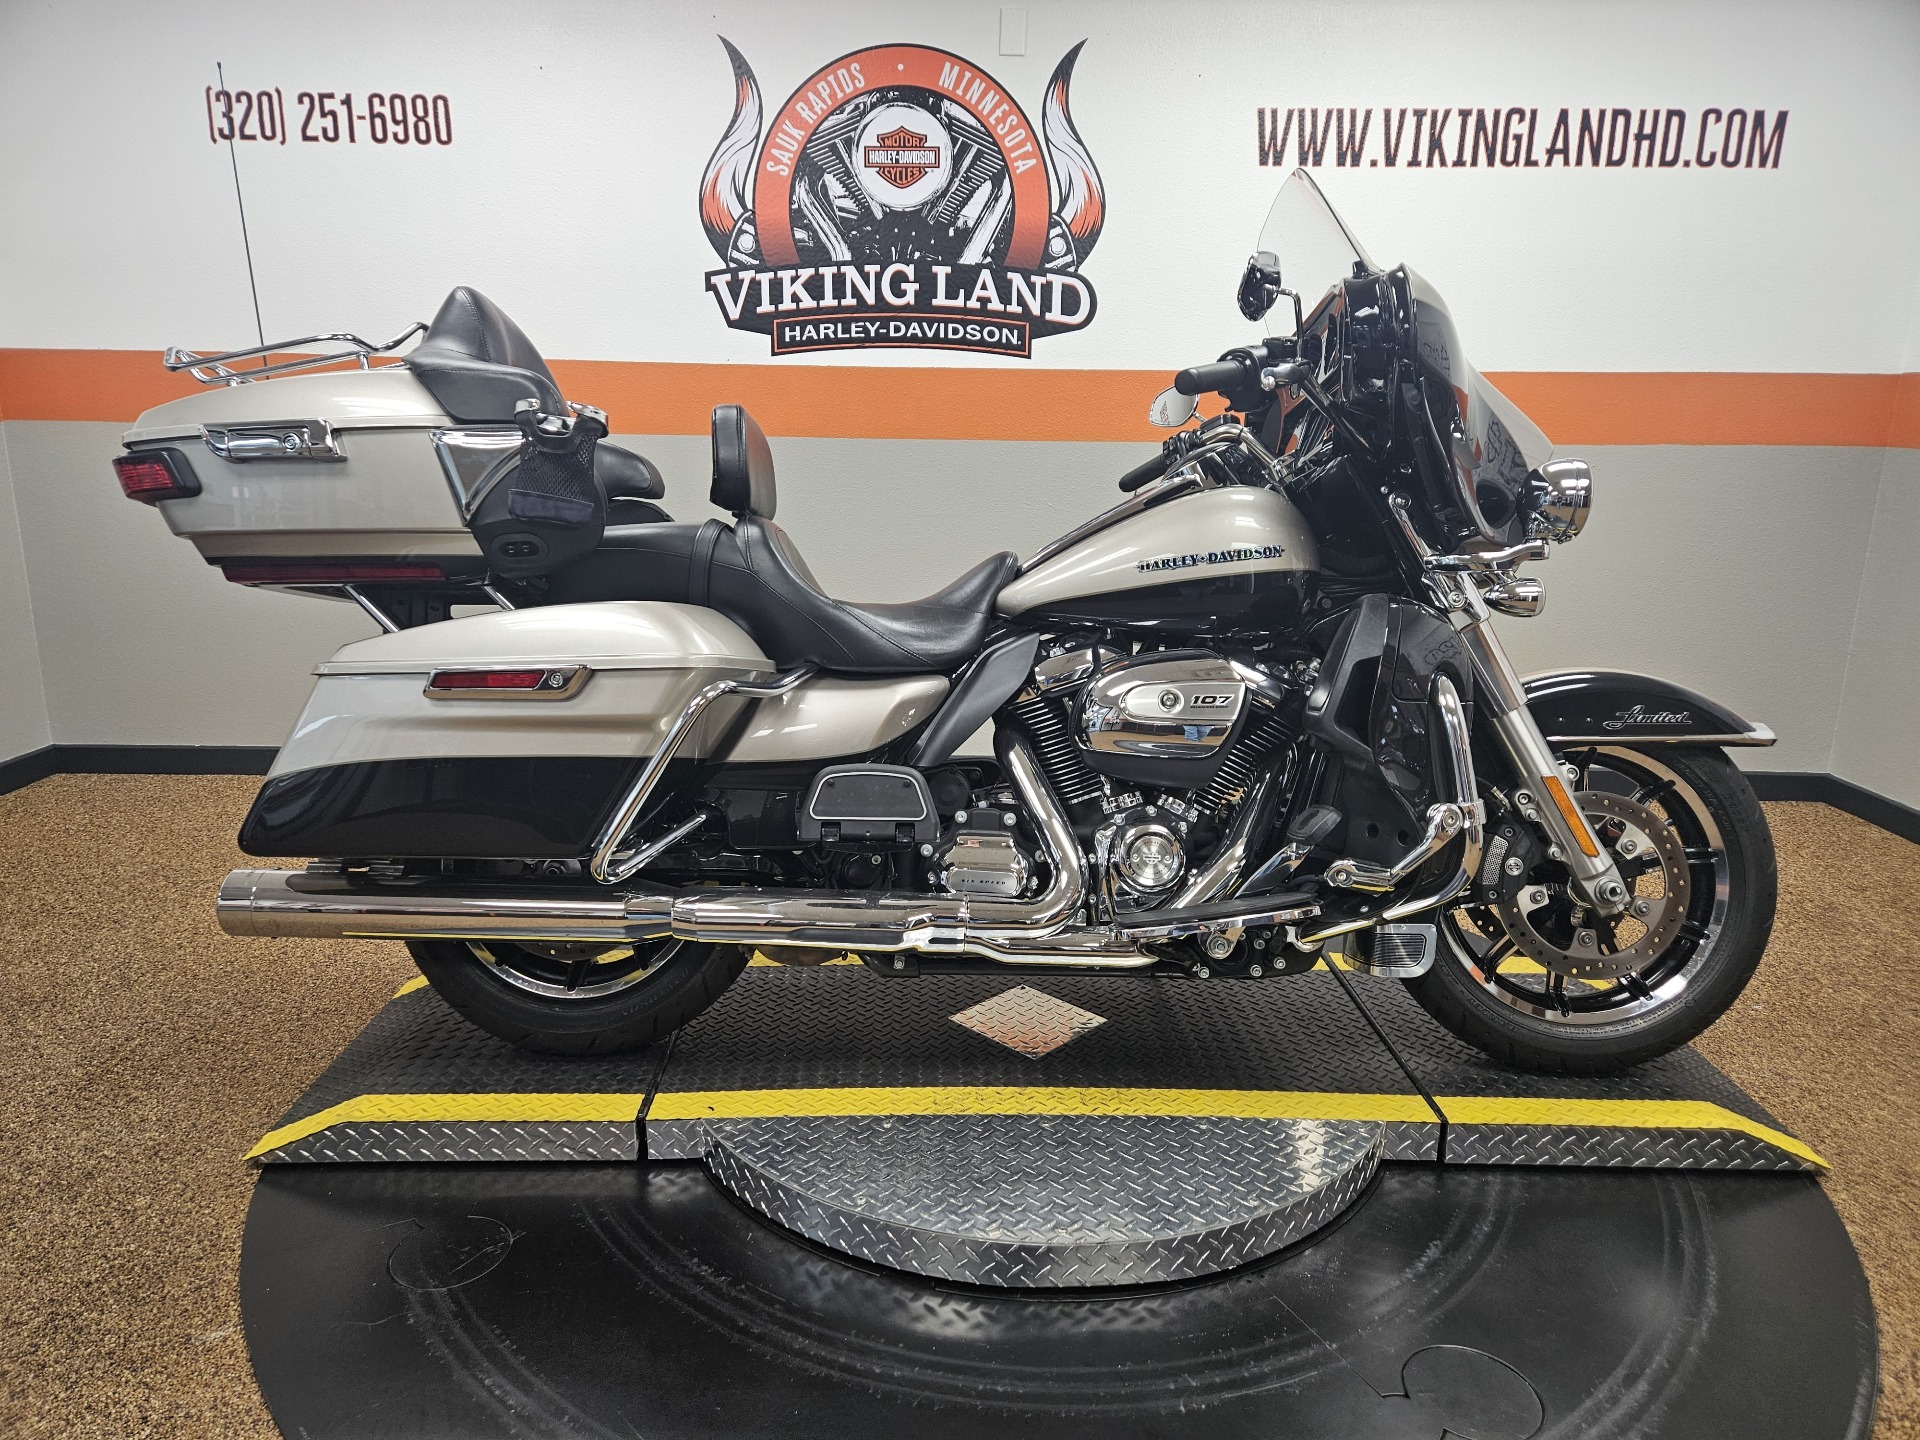 2018 Harley-Davidson Ultra Limited in Sauk Rapids, Minnesota - Photo 1